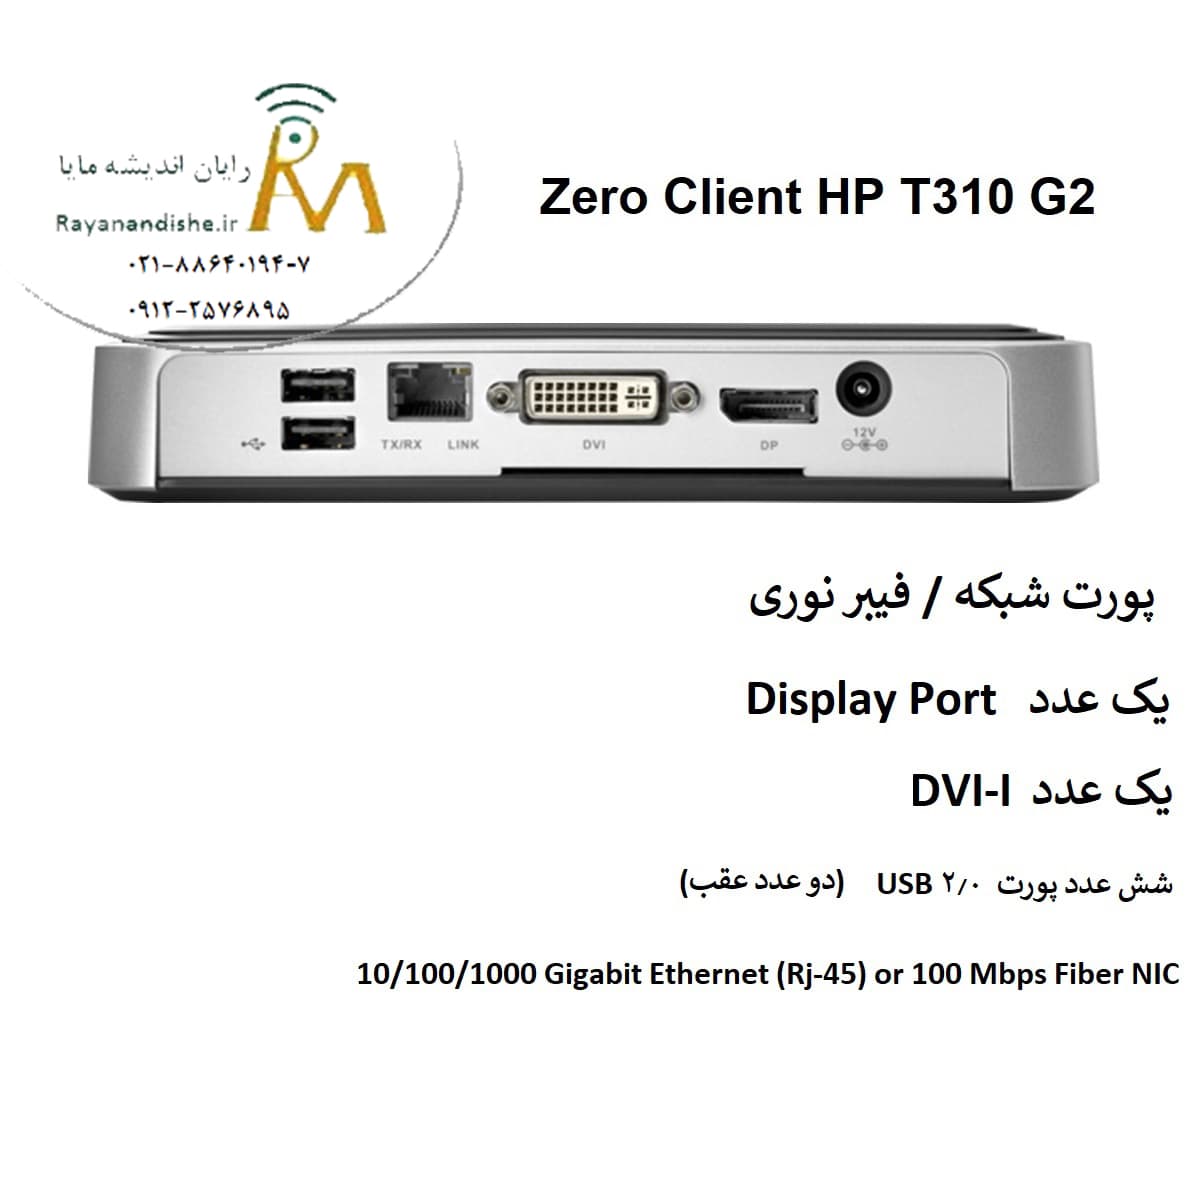 زیروکلاینت HP T310 G2 | قیمت زیرو کلاینت hp t310 g2